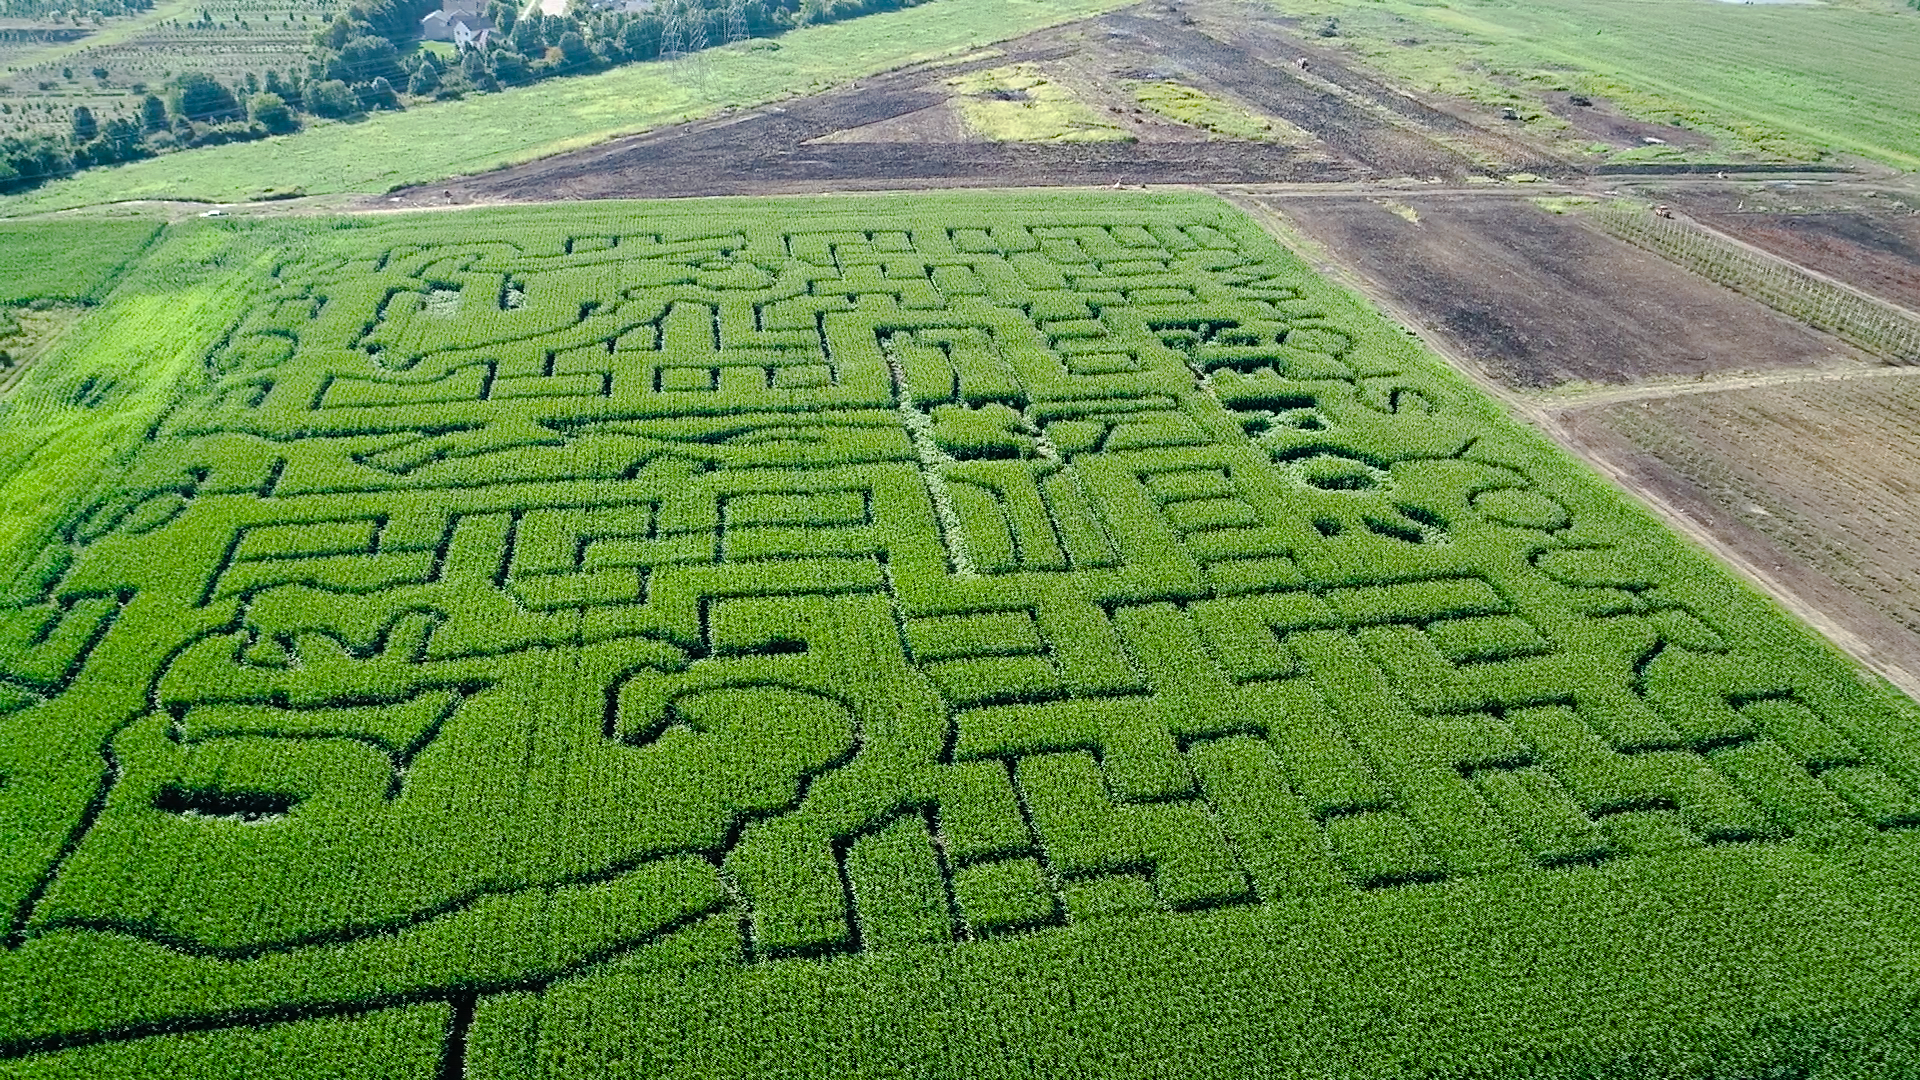 seigel's corn maze